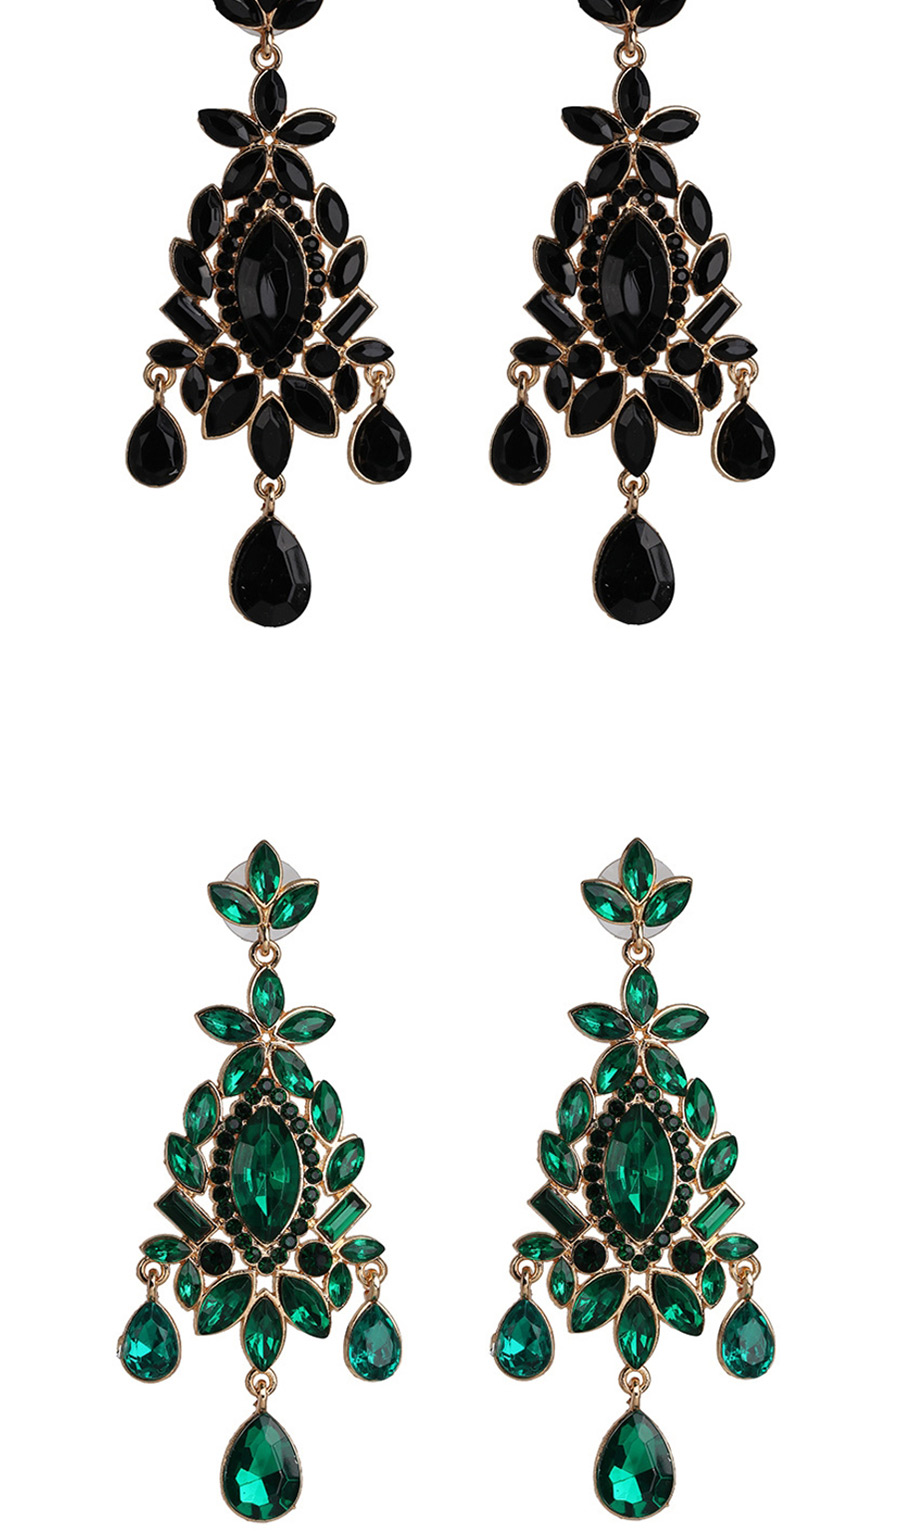 Fashion Gold + Black Geometric Drop Earrings With Diamonds And Flowers,Drop Earrings